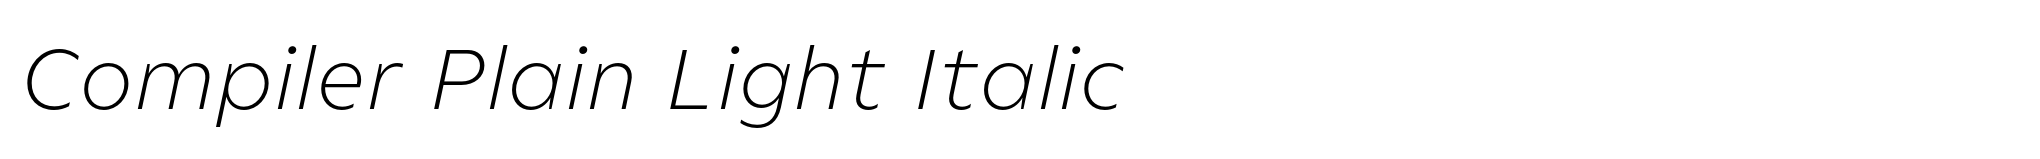 Compiler Plain Light Italic image